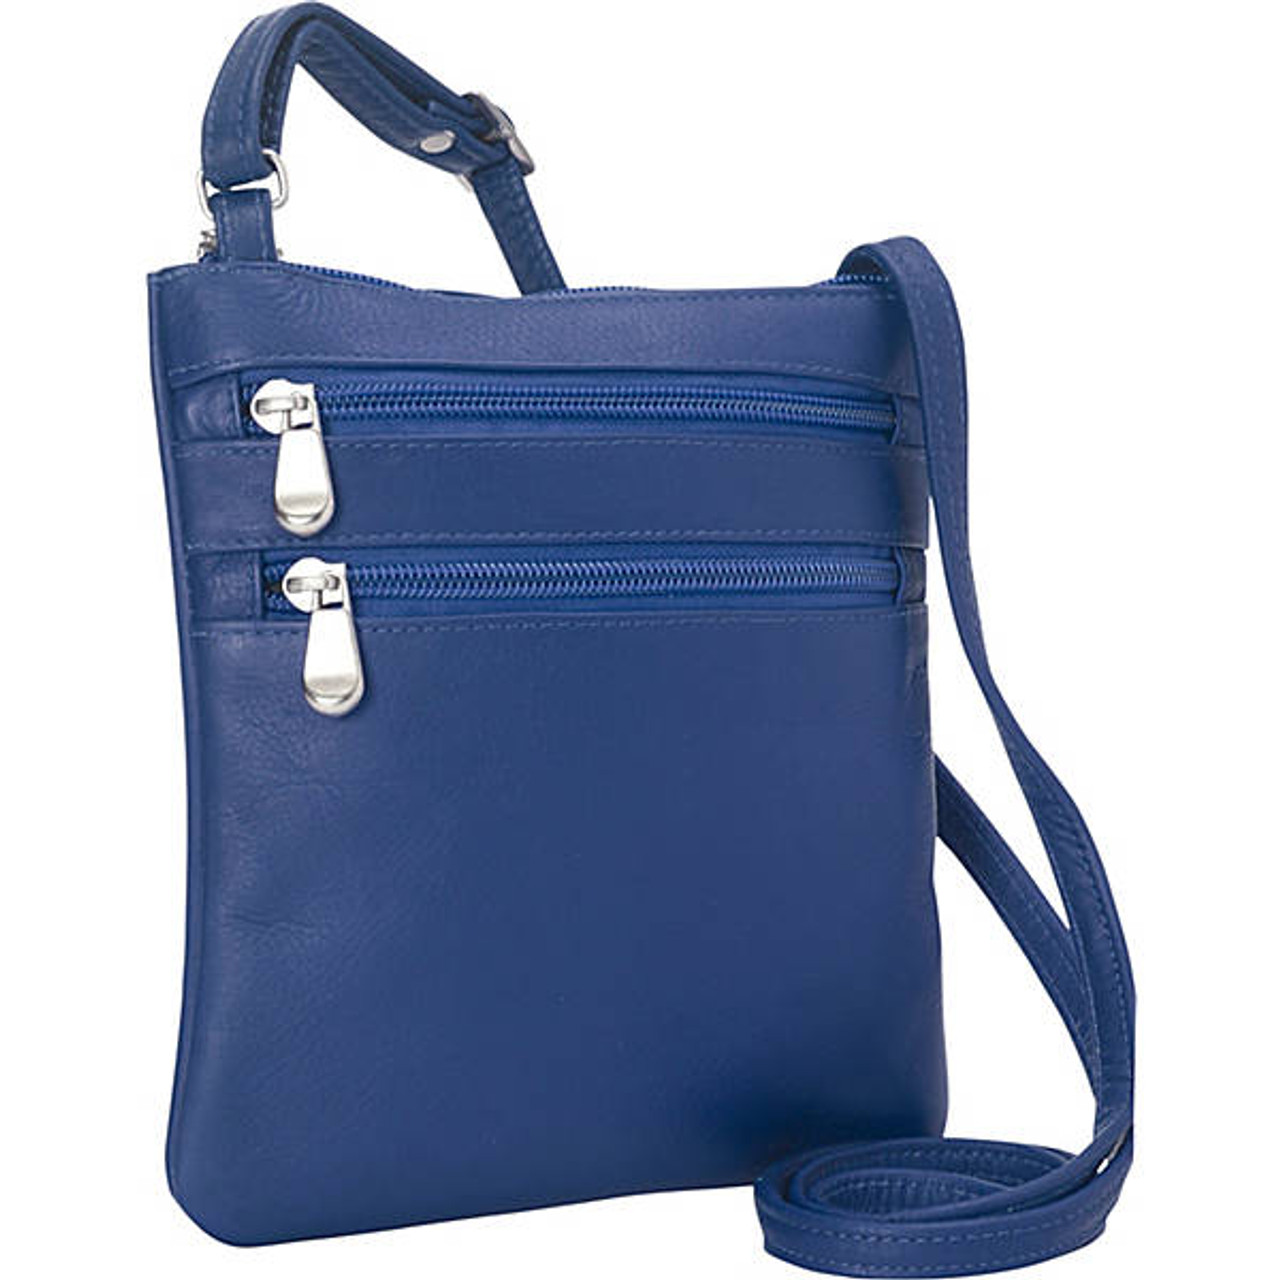 New Winter BUMBAG Pockets 2019 Brand Fashion Designer Bags Teddy Bags  M55425 Handbags Wallet Women Crossbody Bag 01 From Luxurydesigner001,  $184.04